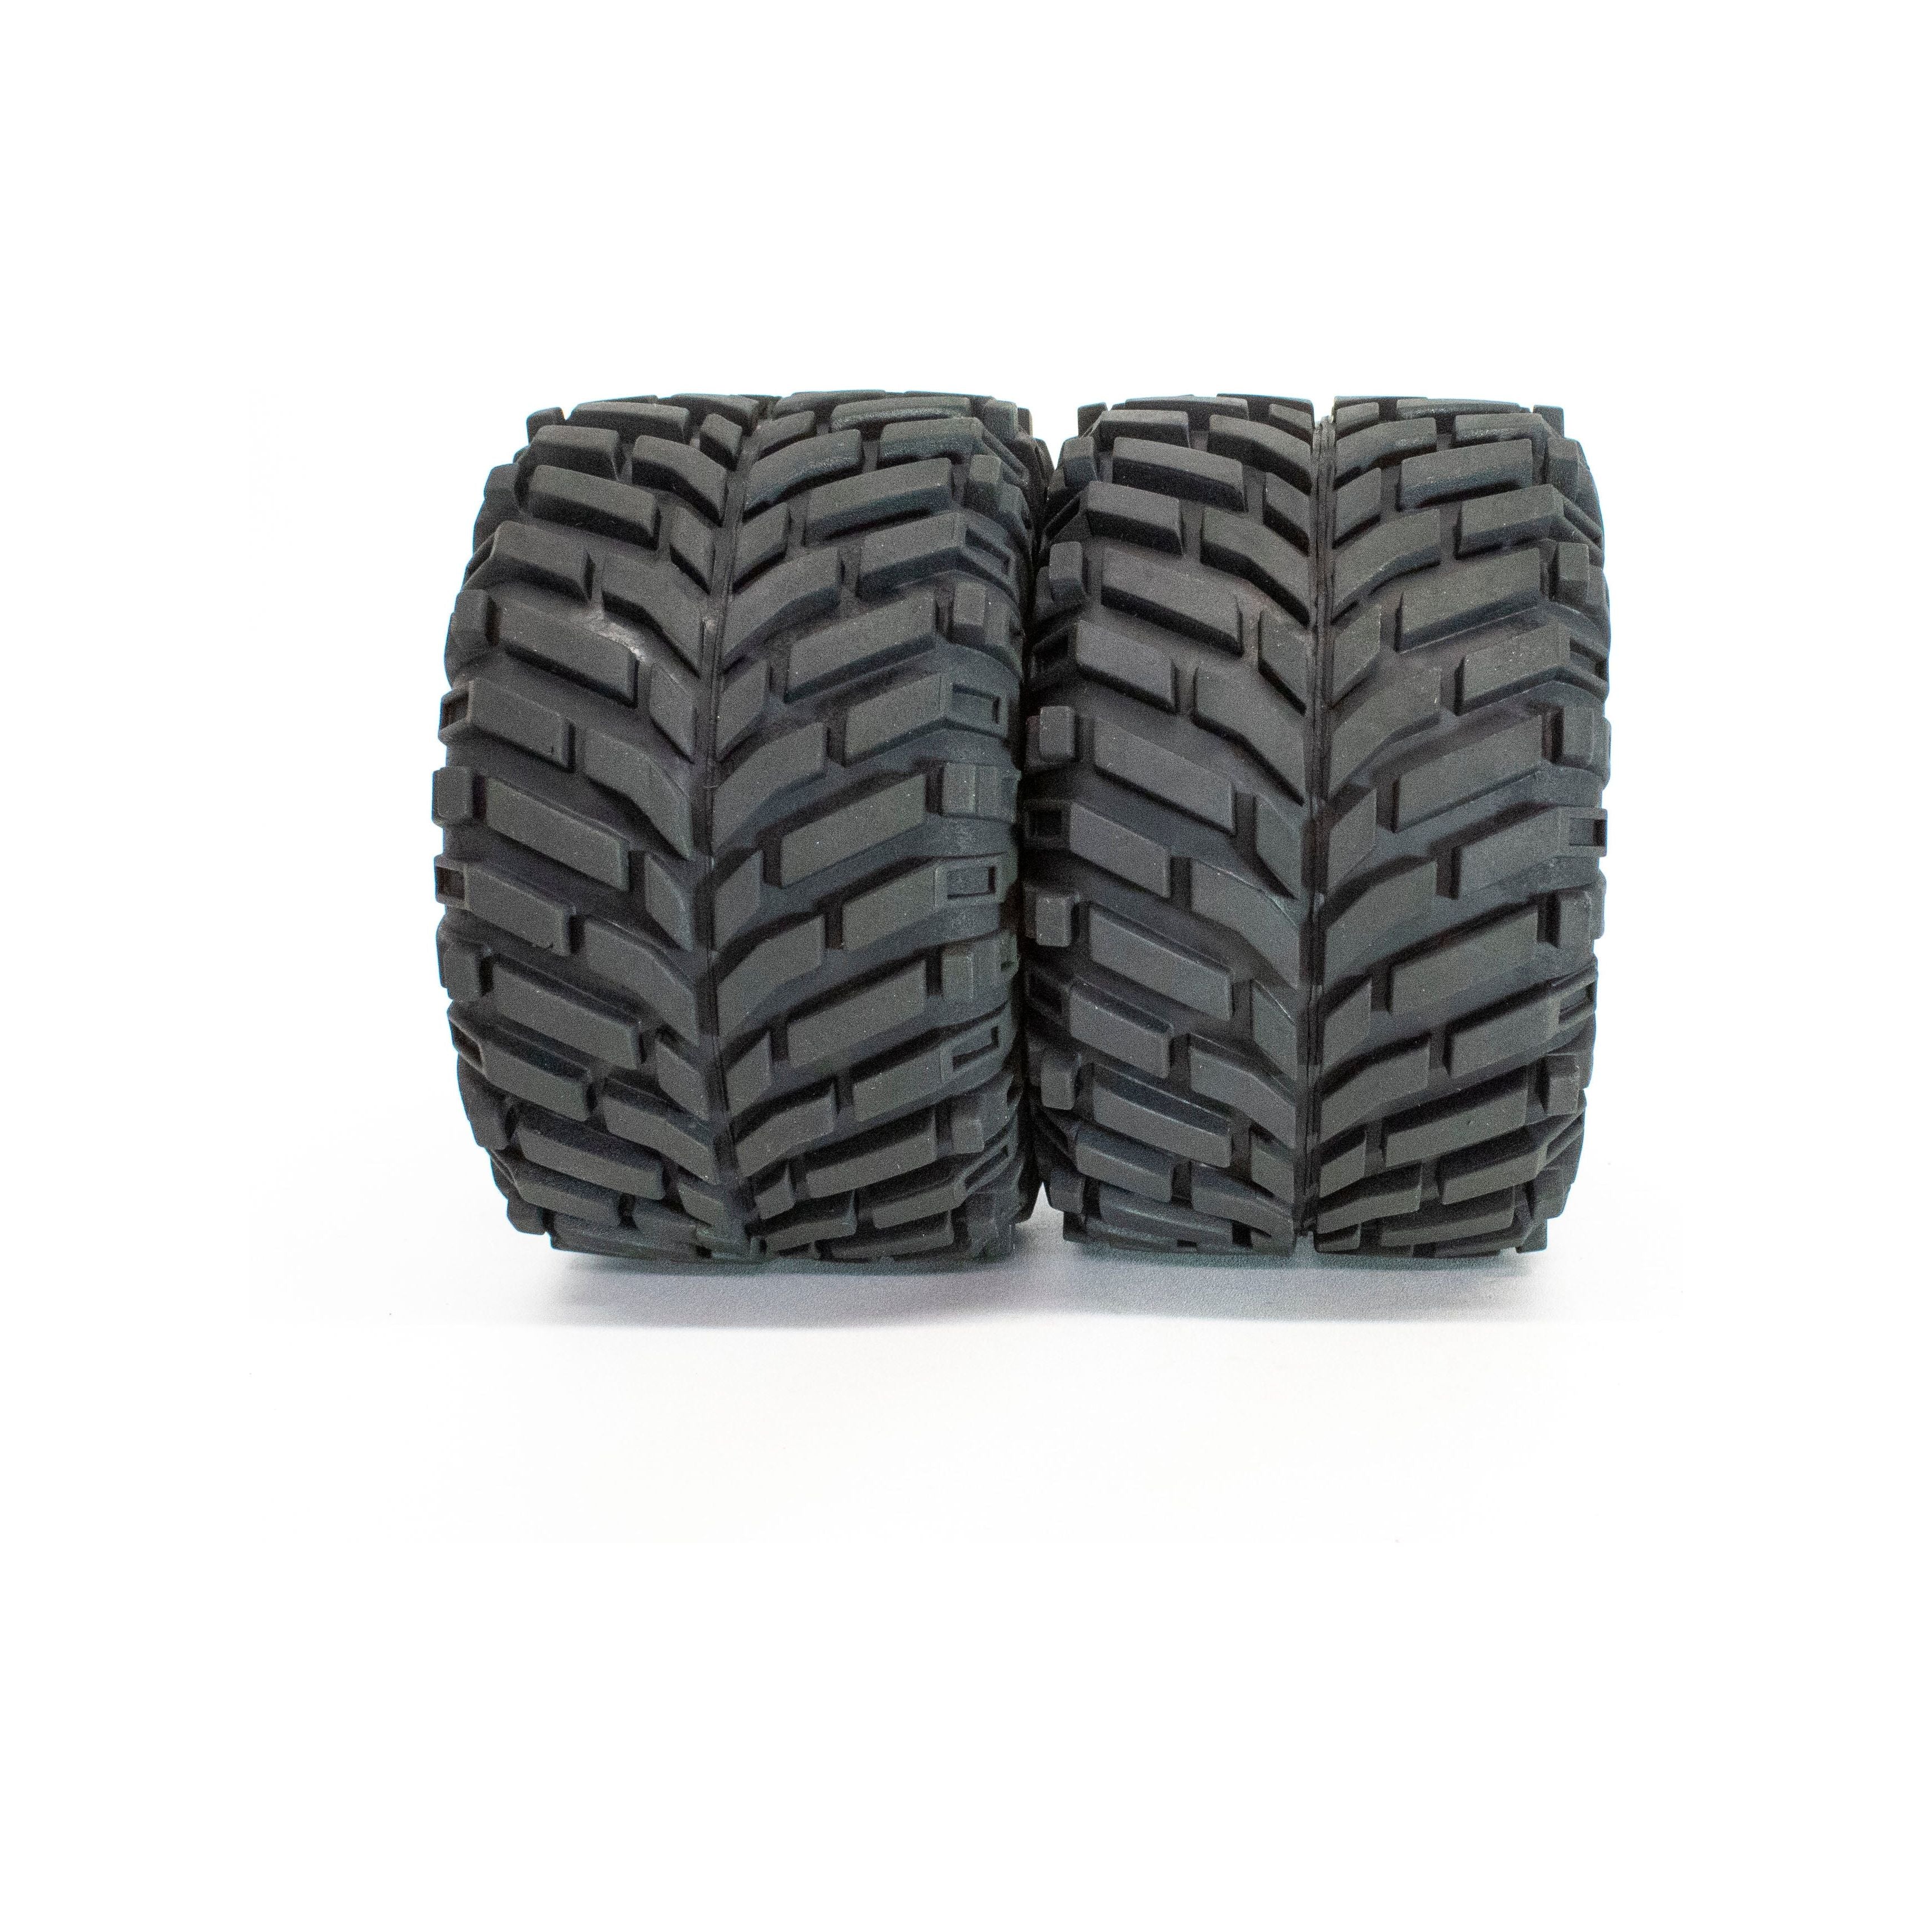 IMEX 2.2 Claw Dawg Tires (1 Pair)